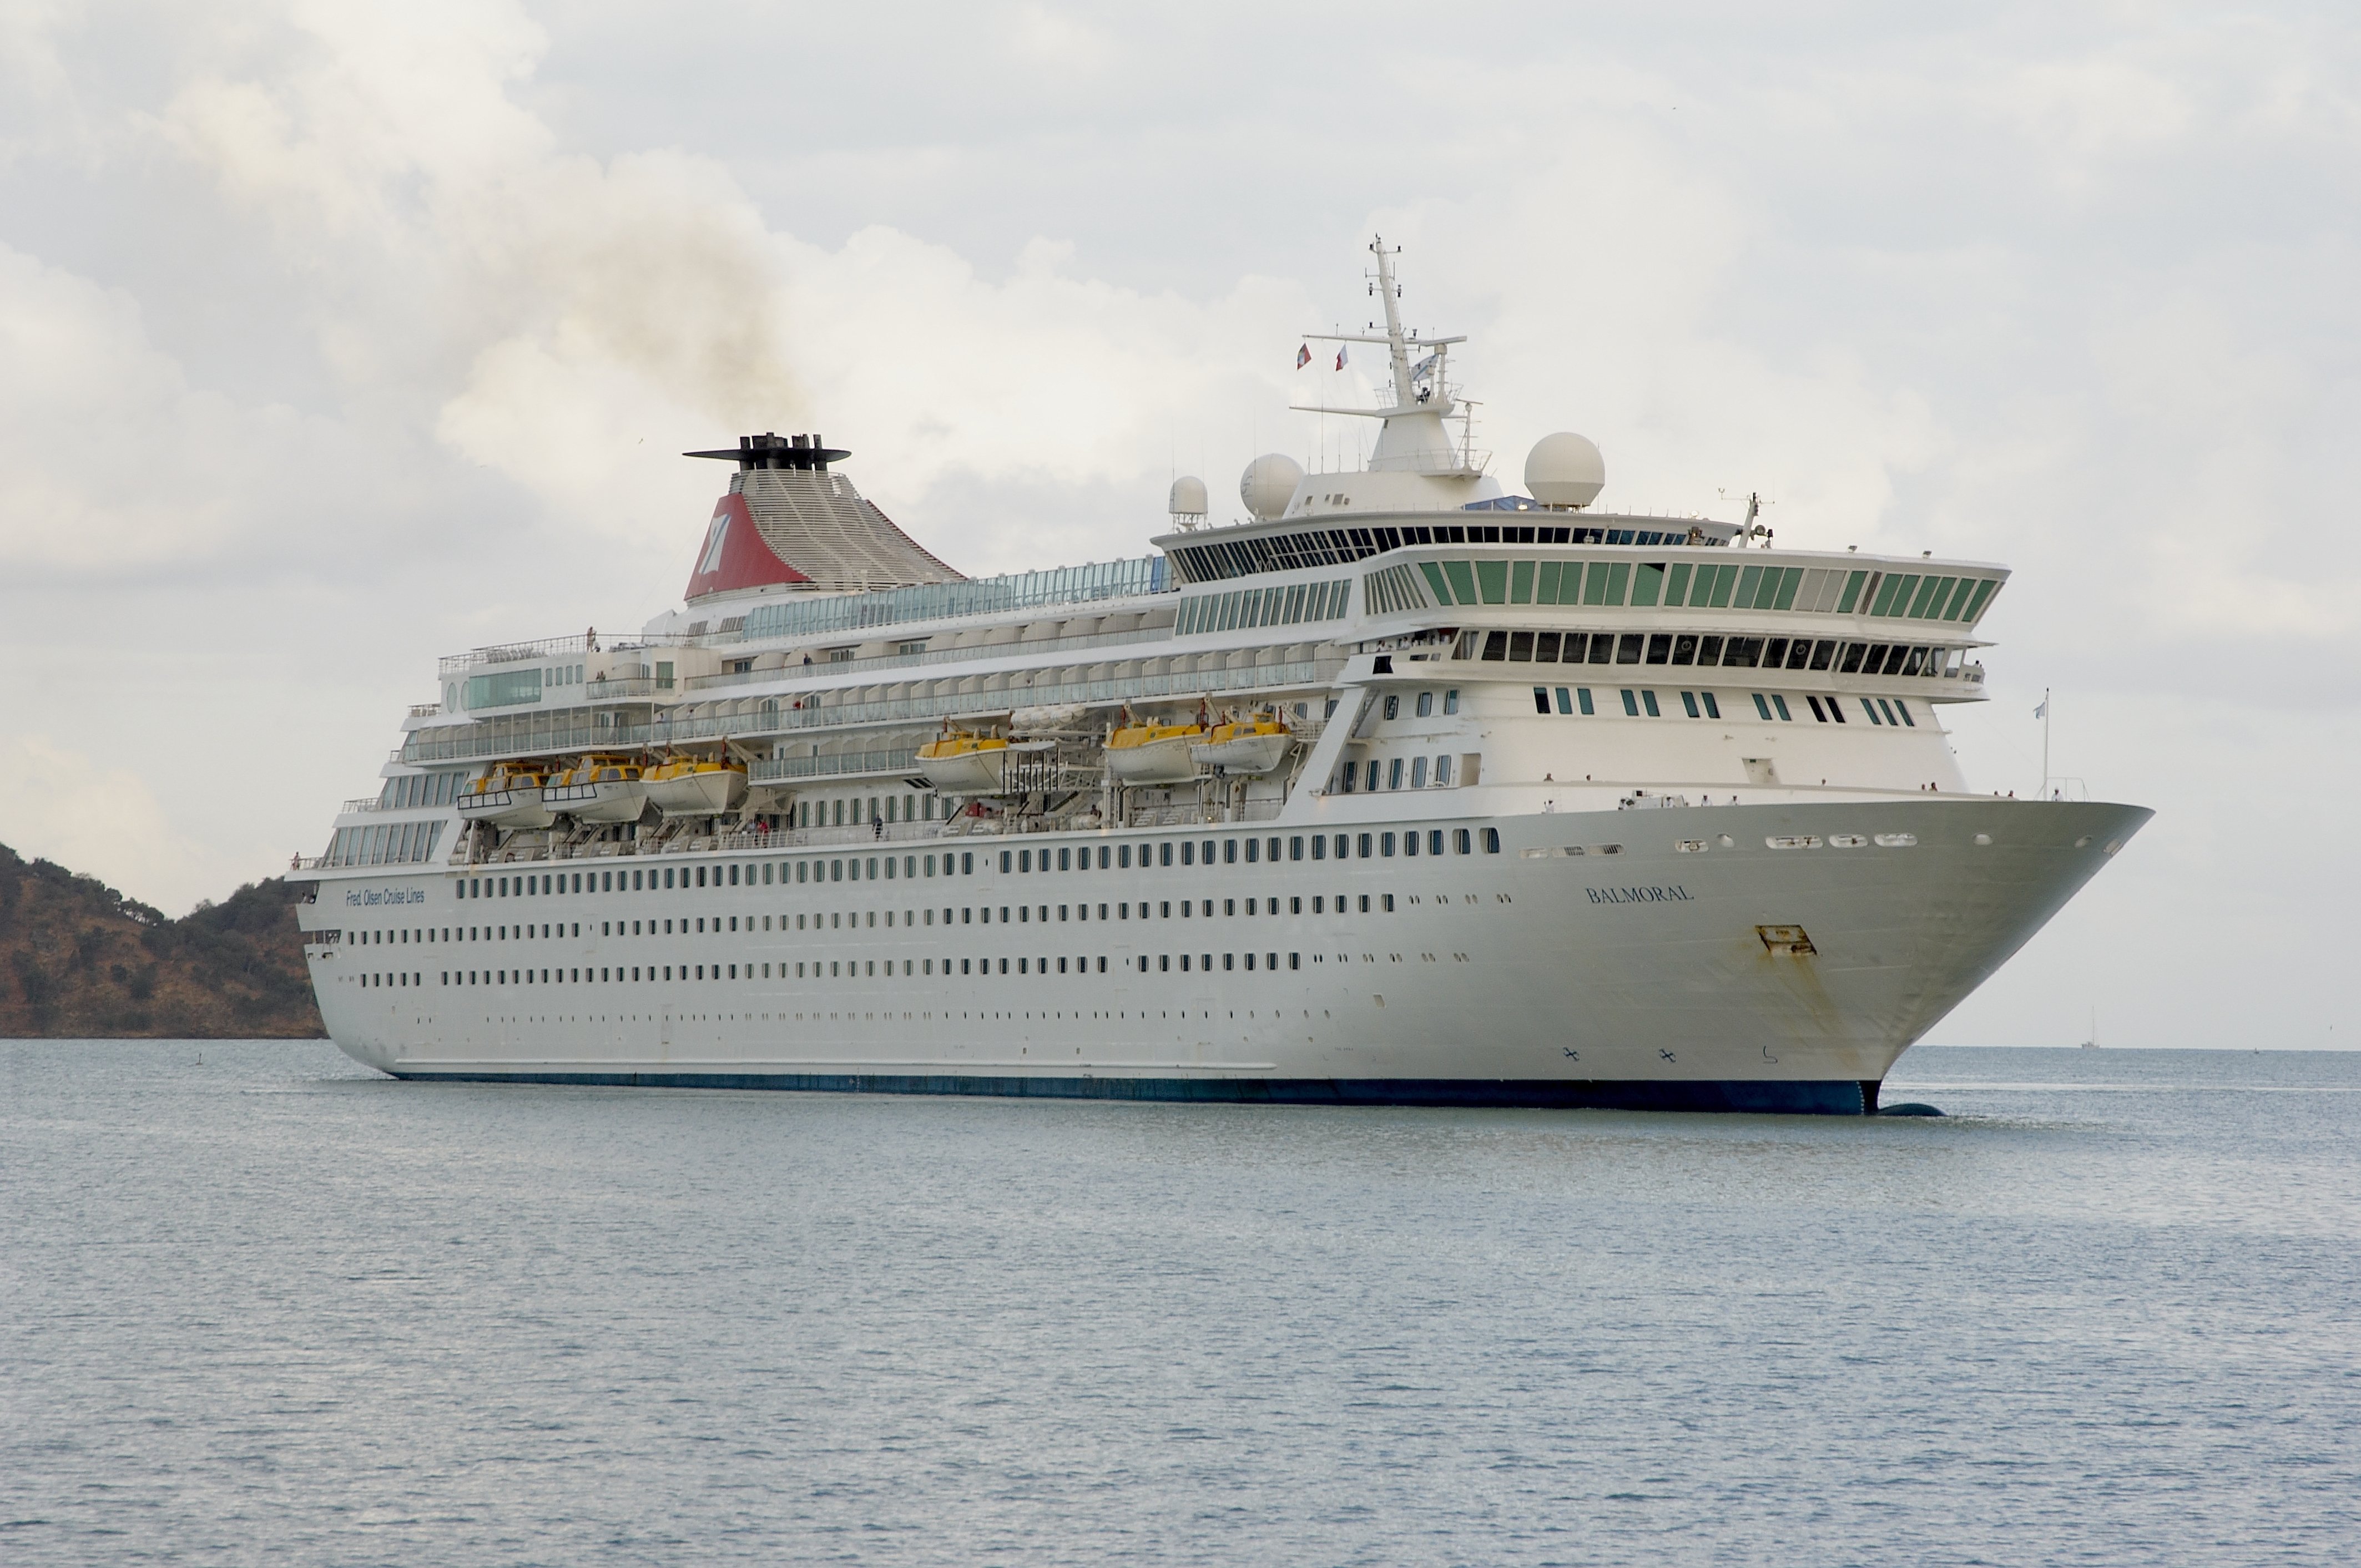 Cruise Ship Norovirus Season Begins: 252 Passengers Sick On Ship Docked In Maine